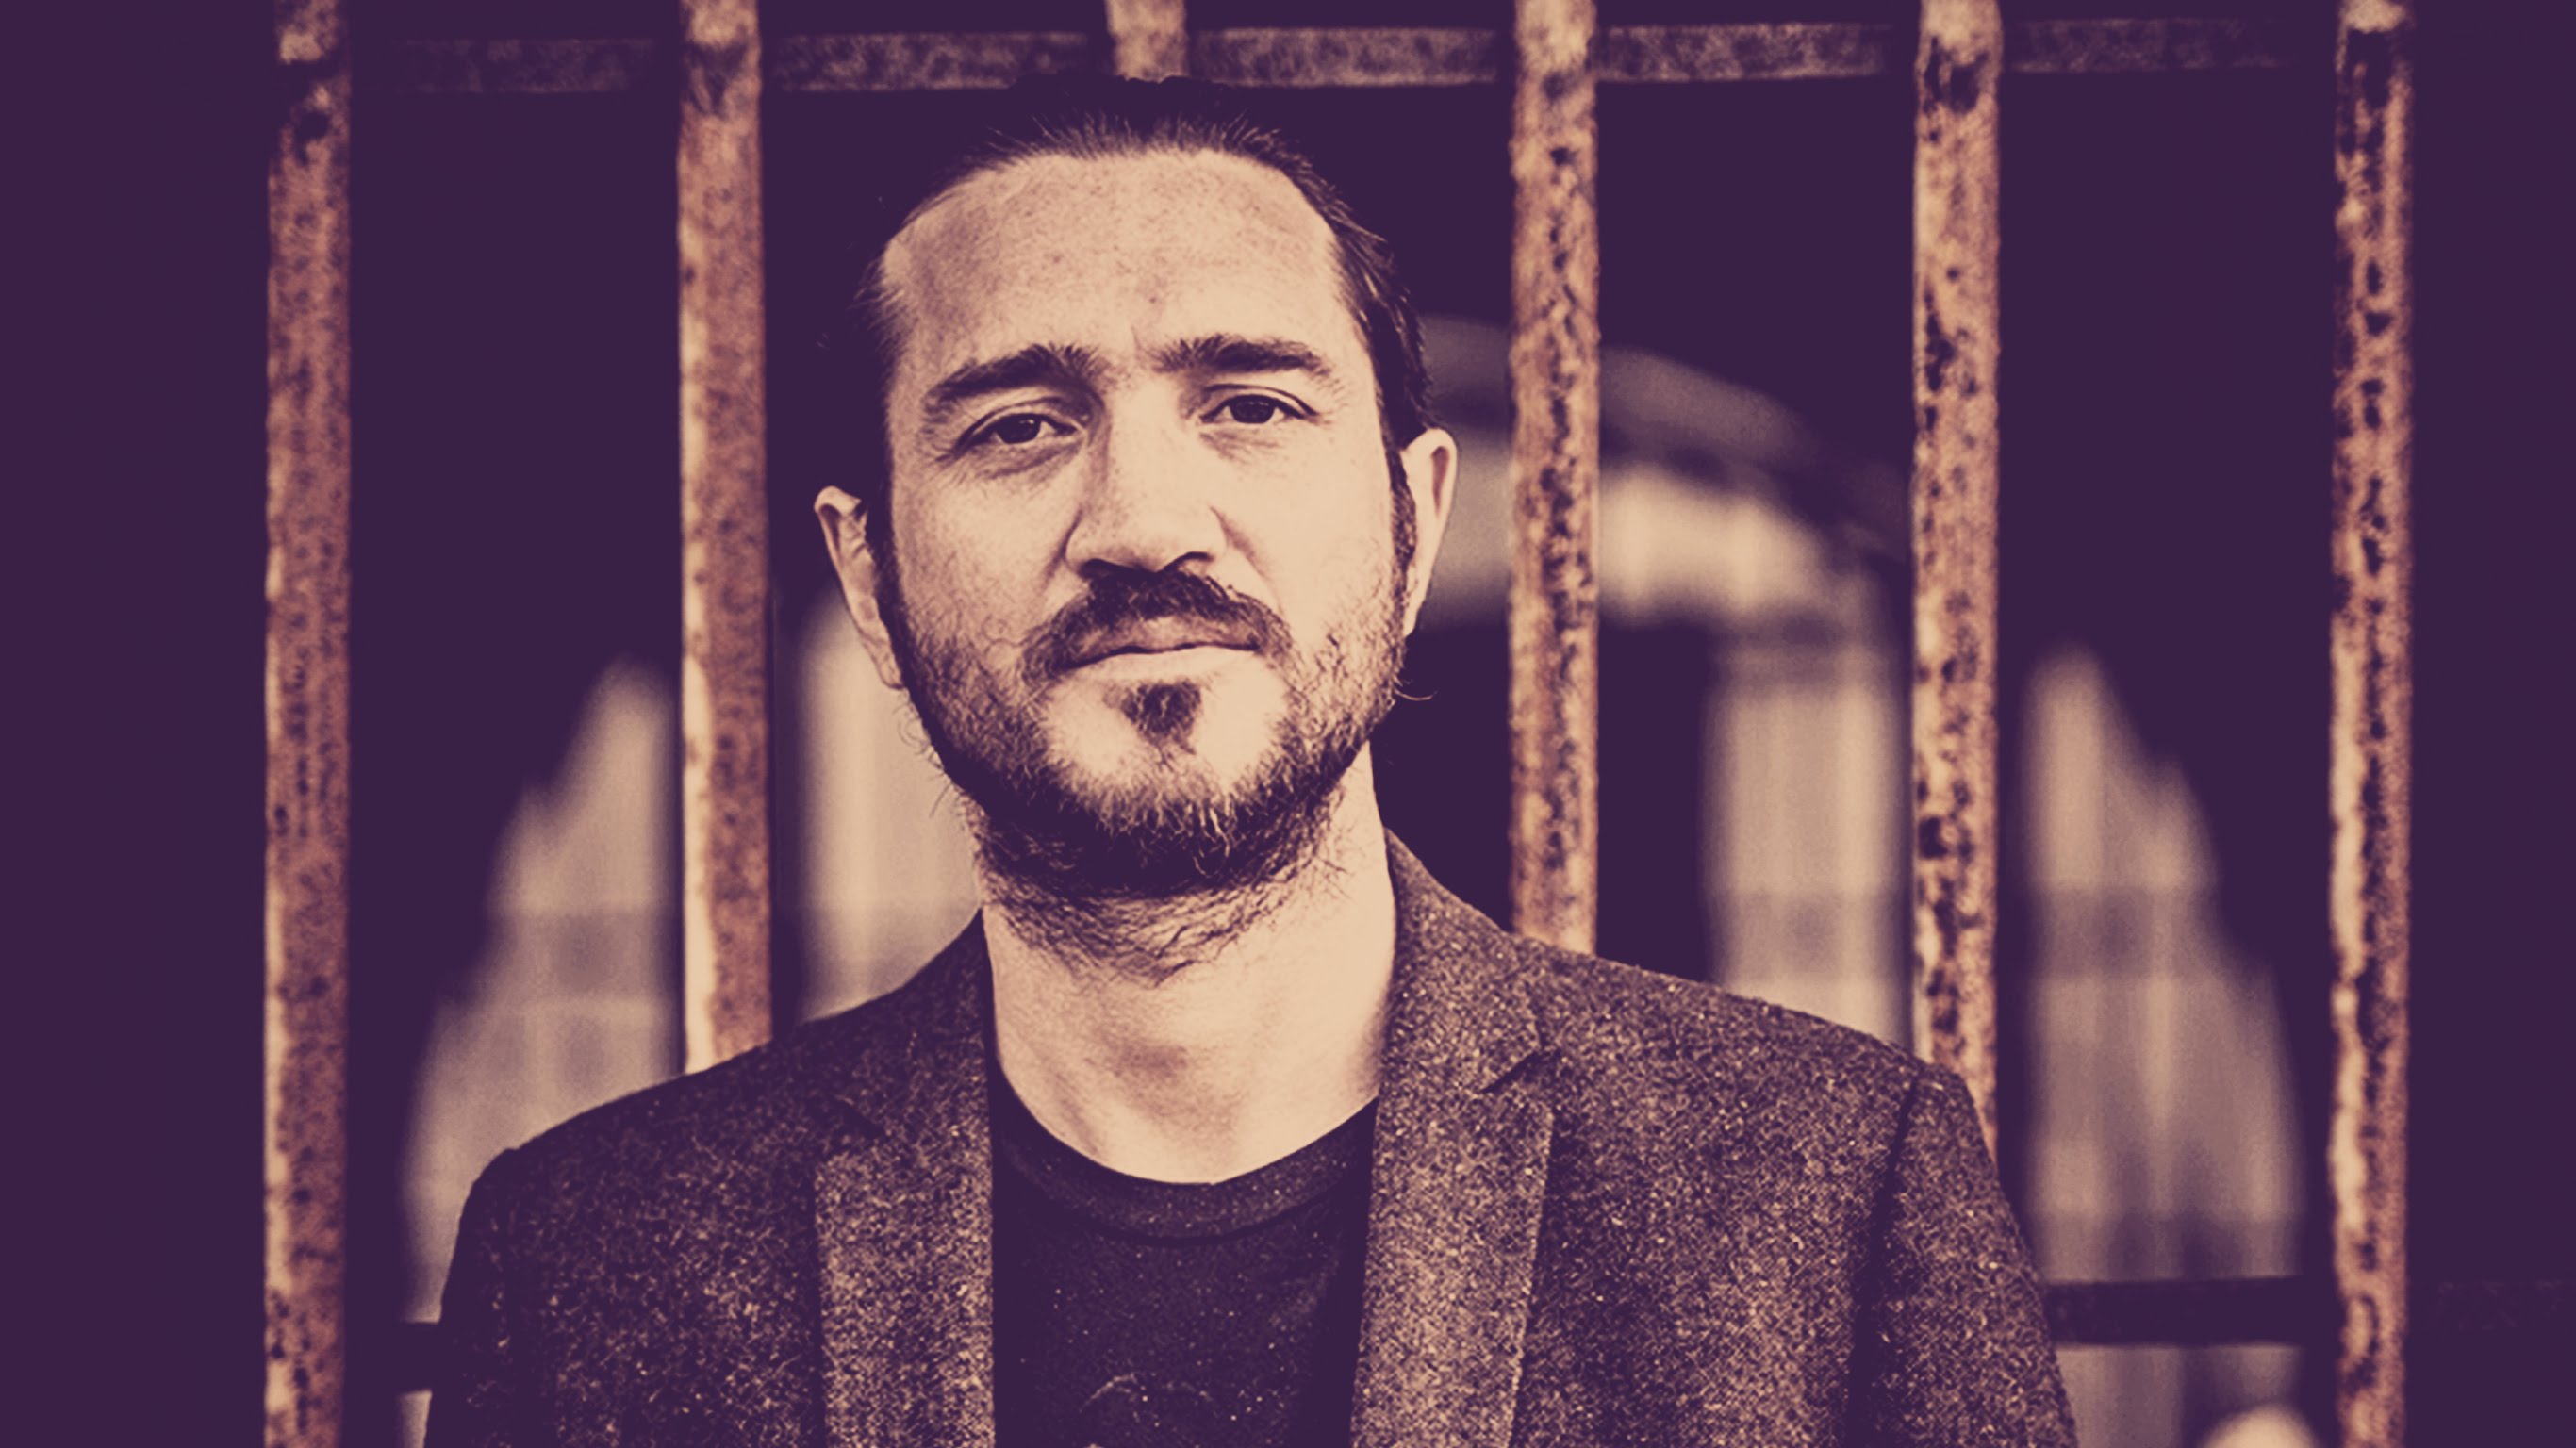 John Frusciante Backgrounds on Wallpapers Vista